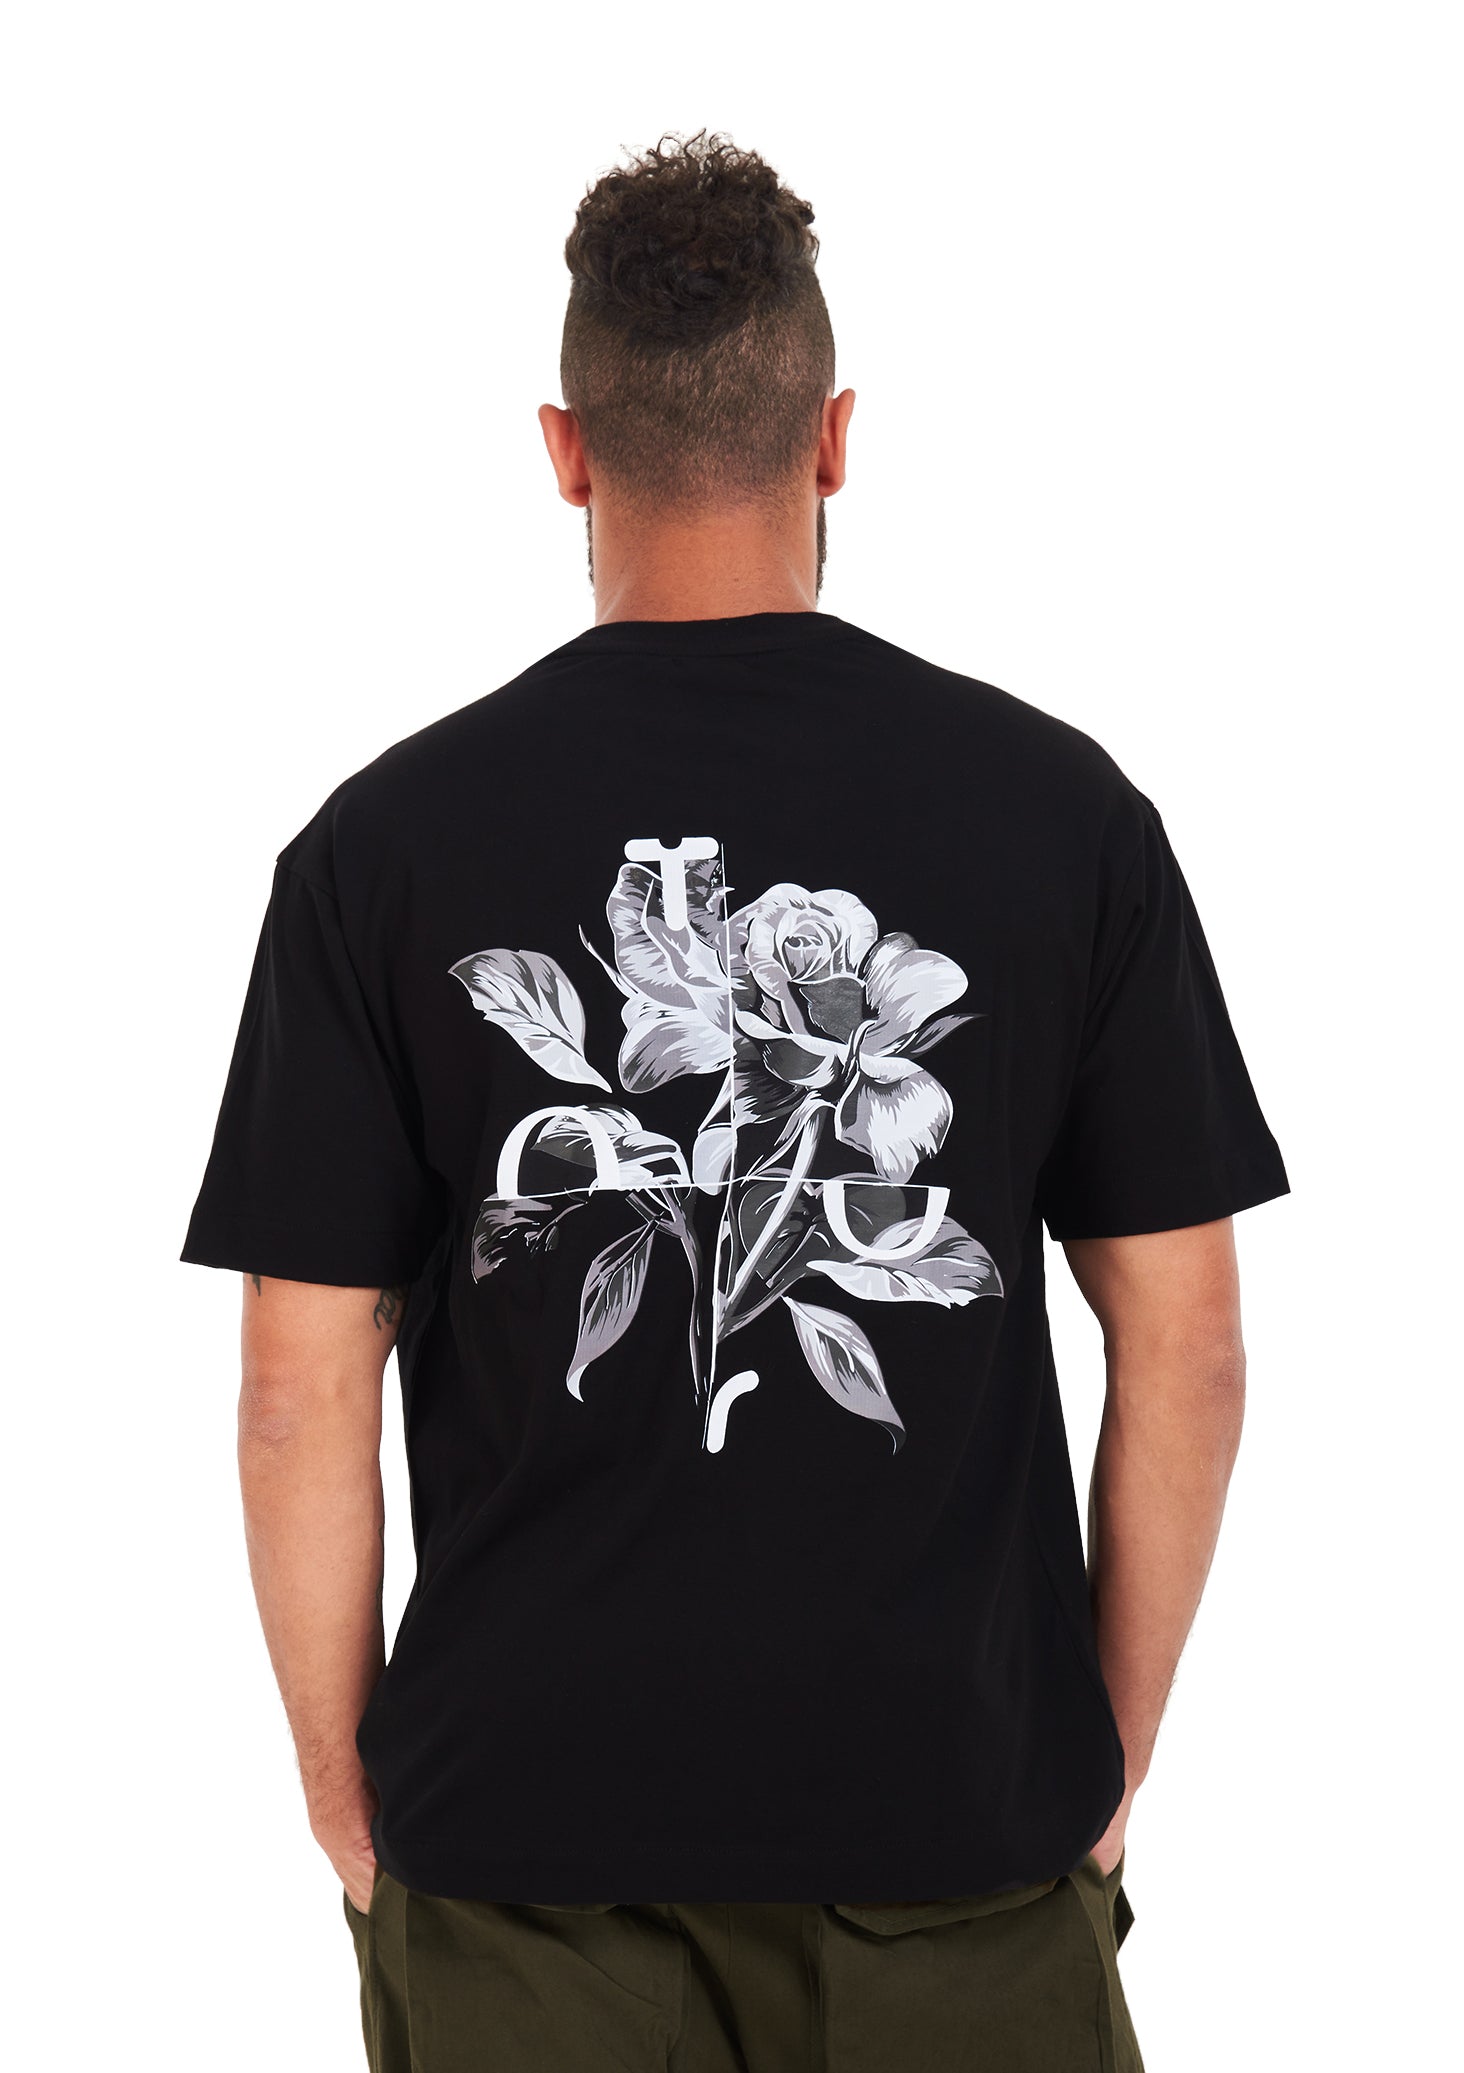 Flower tee  Oversized printed Black T-shirt .